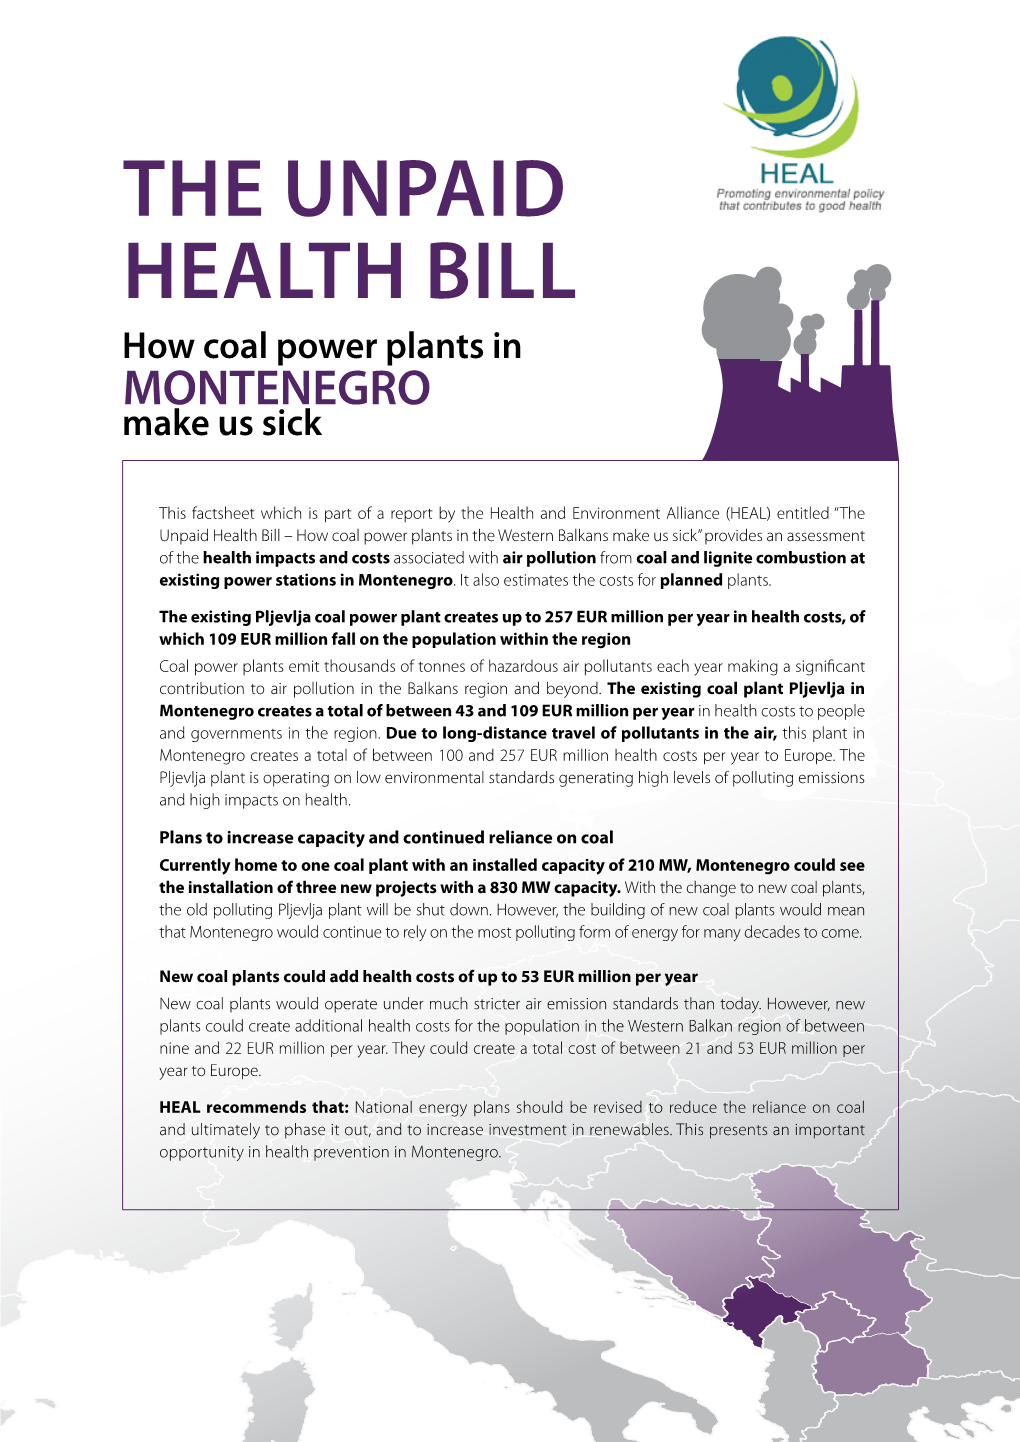 THE UNPAID HEALTH BILL How Coal Power Plants in MONTENEGRO Make Us Sick